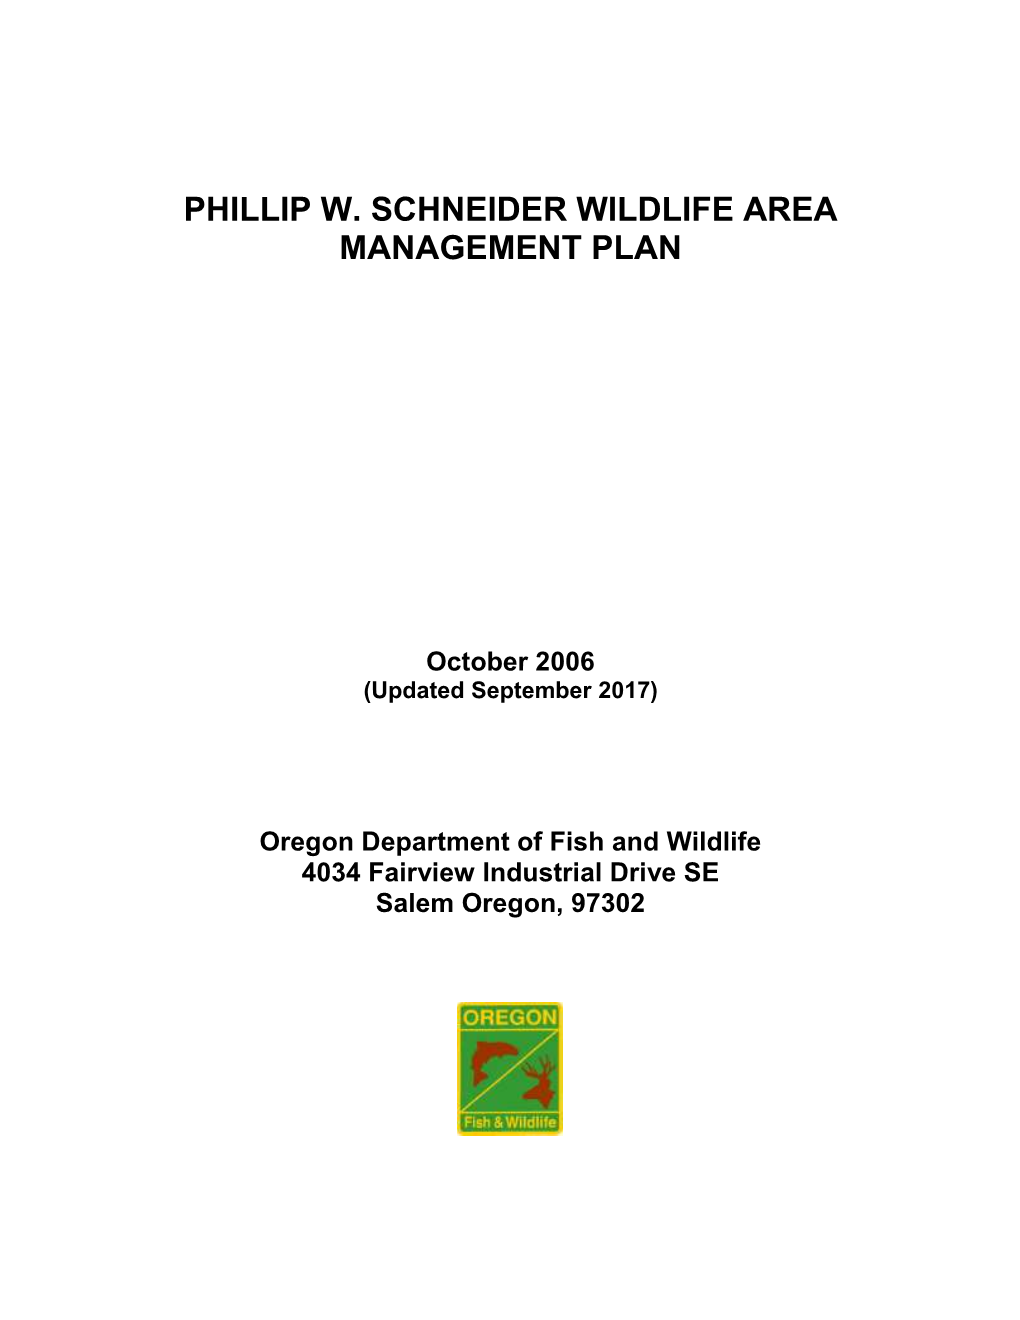 Wildlife Area Management Plan